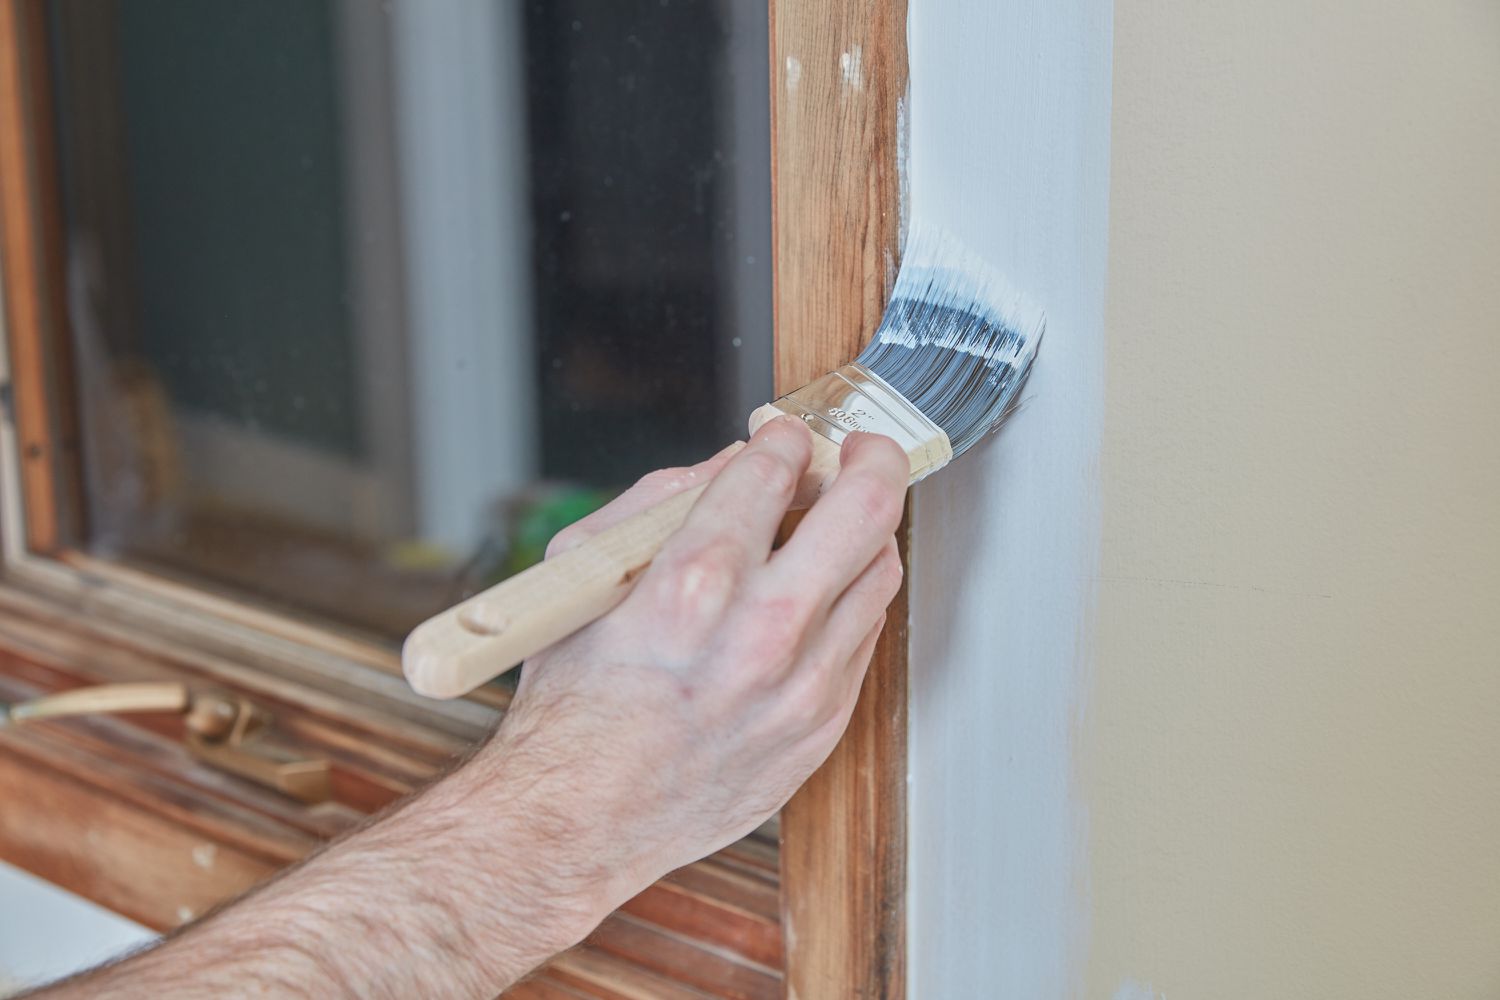 Paintbrush applying white paint to wall near wood window trim